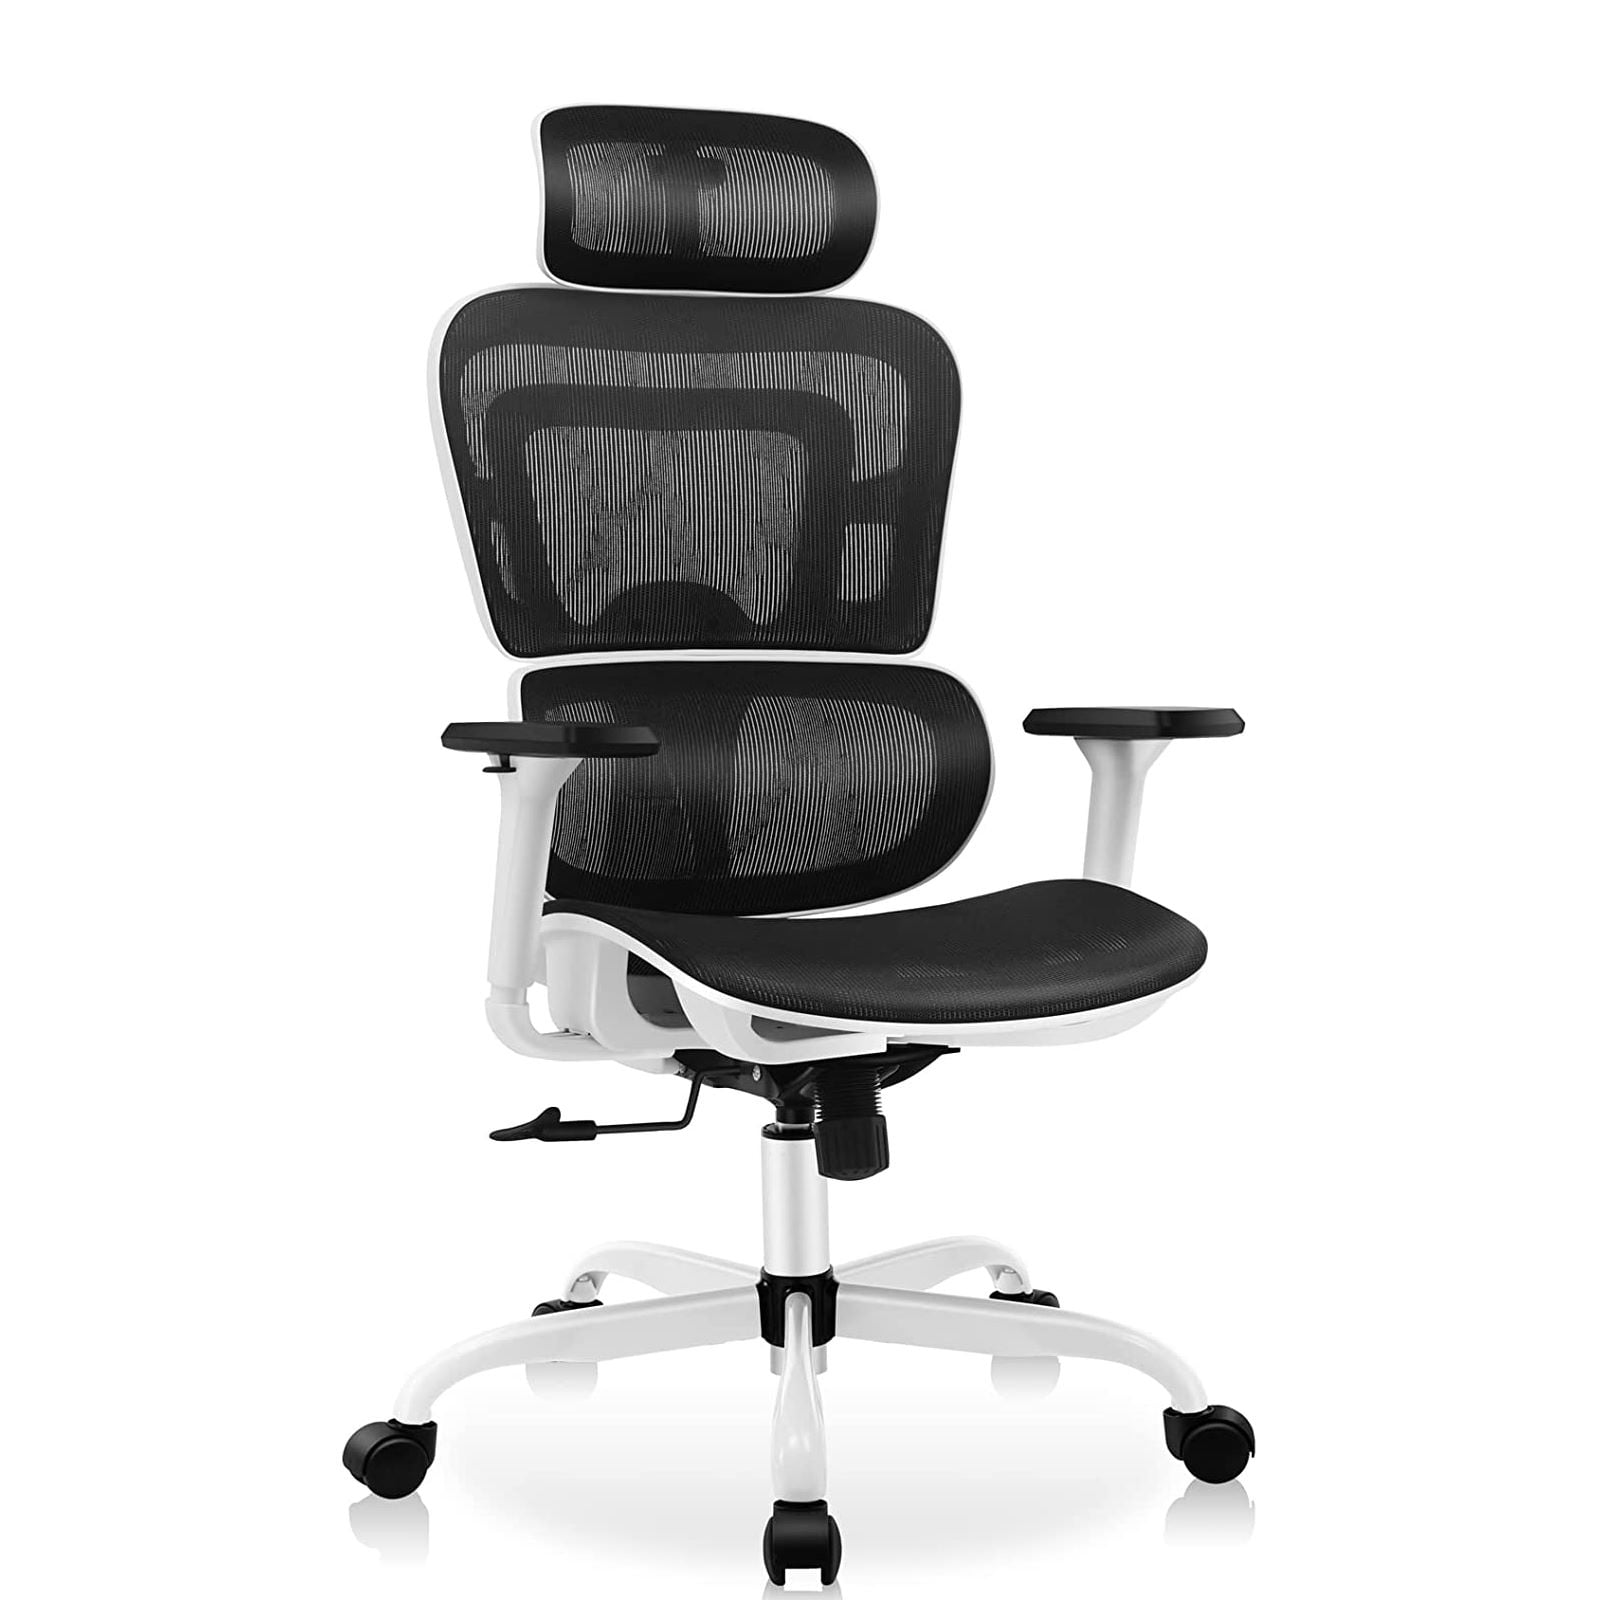 Shrike Ergonomic Chair - Black - Delivered in 3-5 Business Days